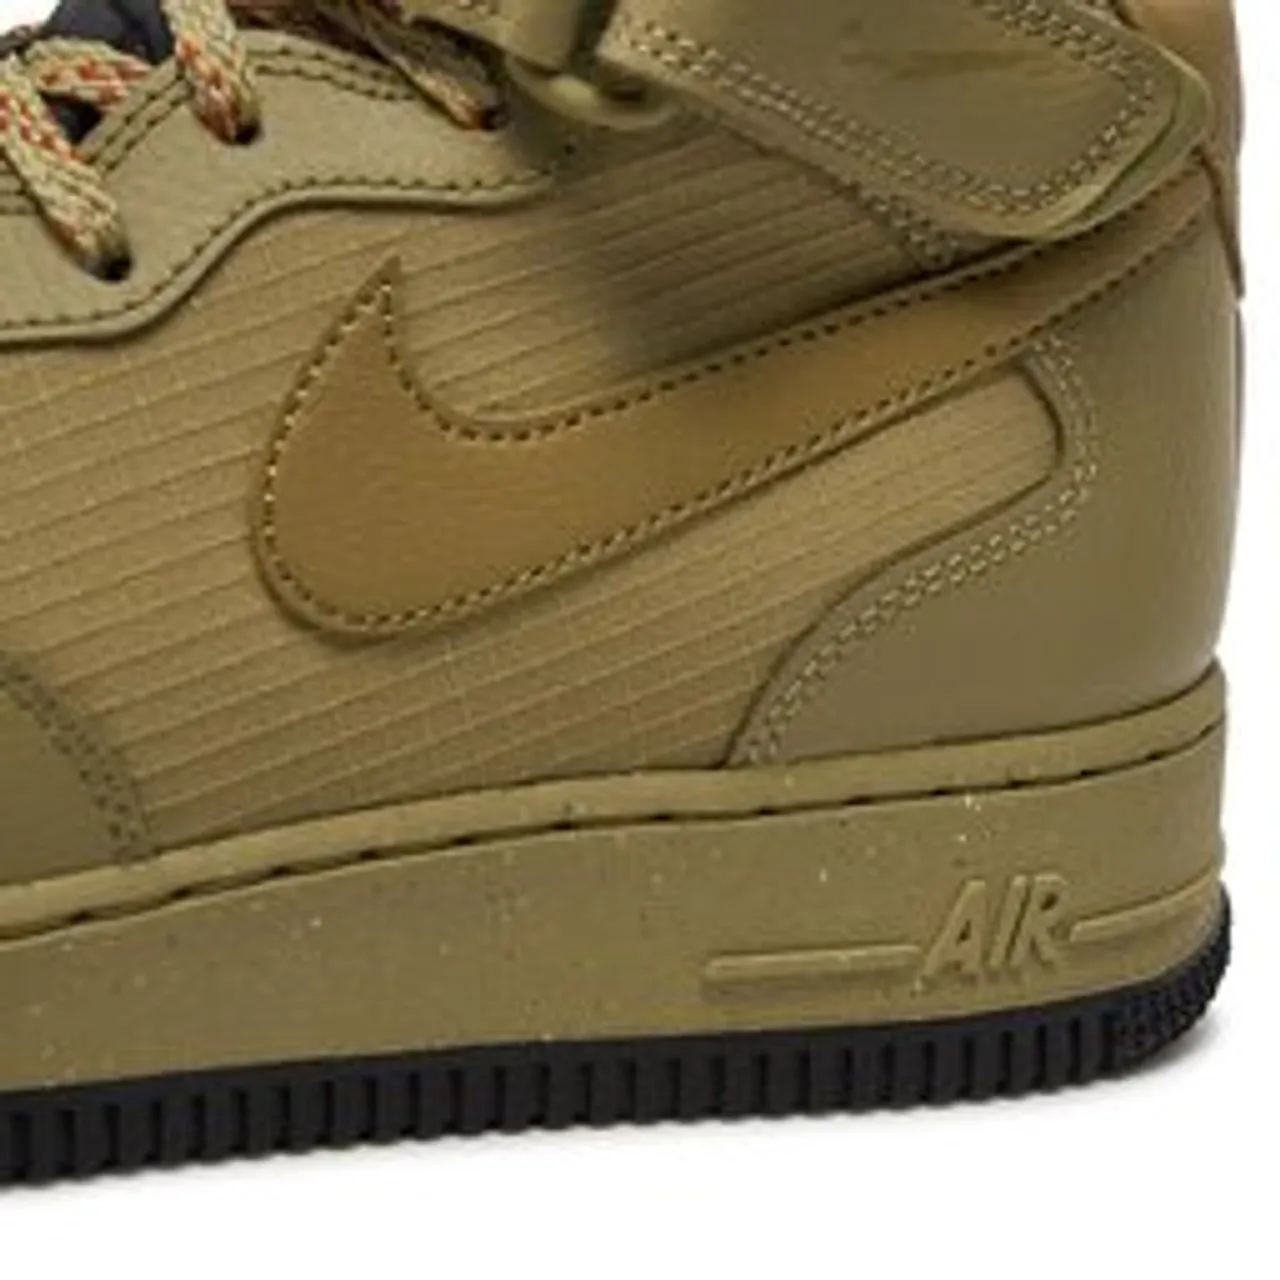 Sneakers Nike Air Force 1 Mid '07 FB8881 200 Grün